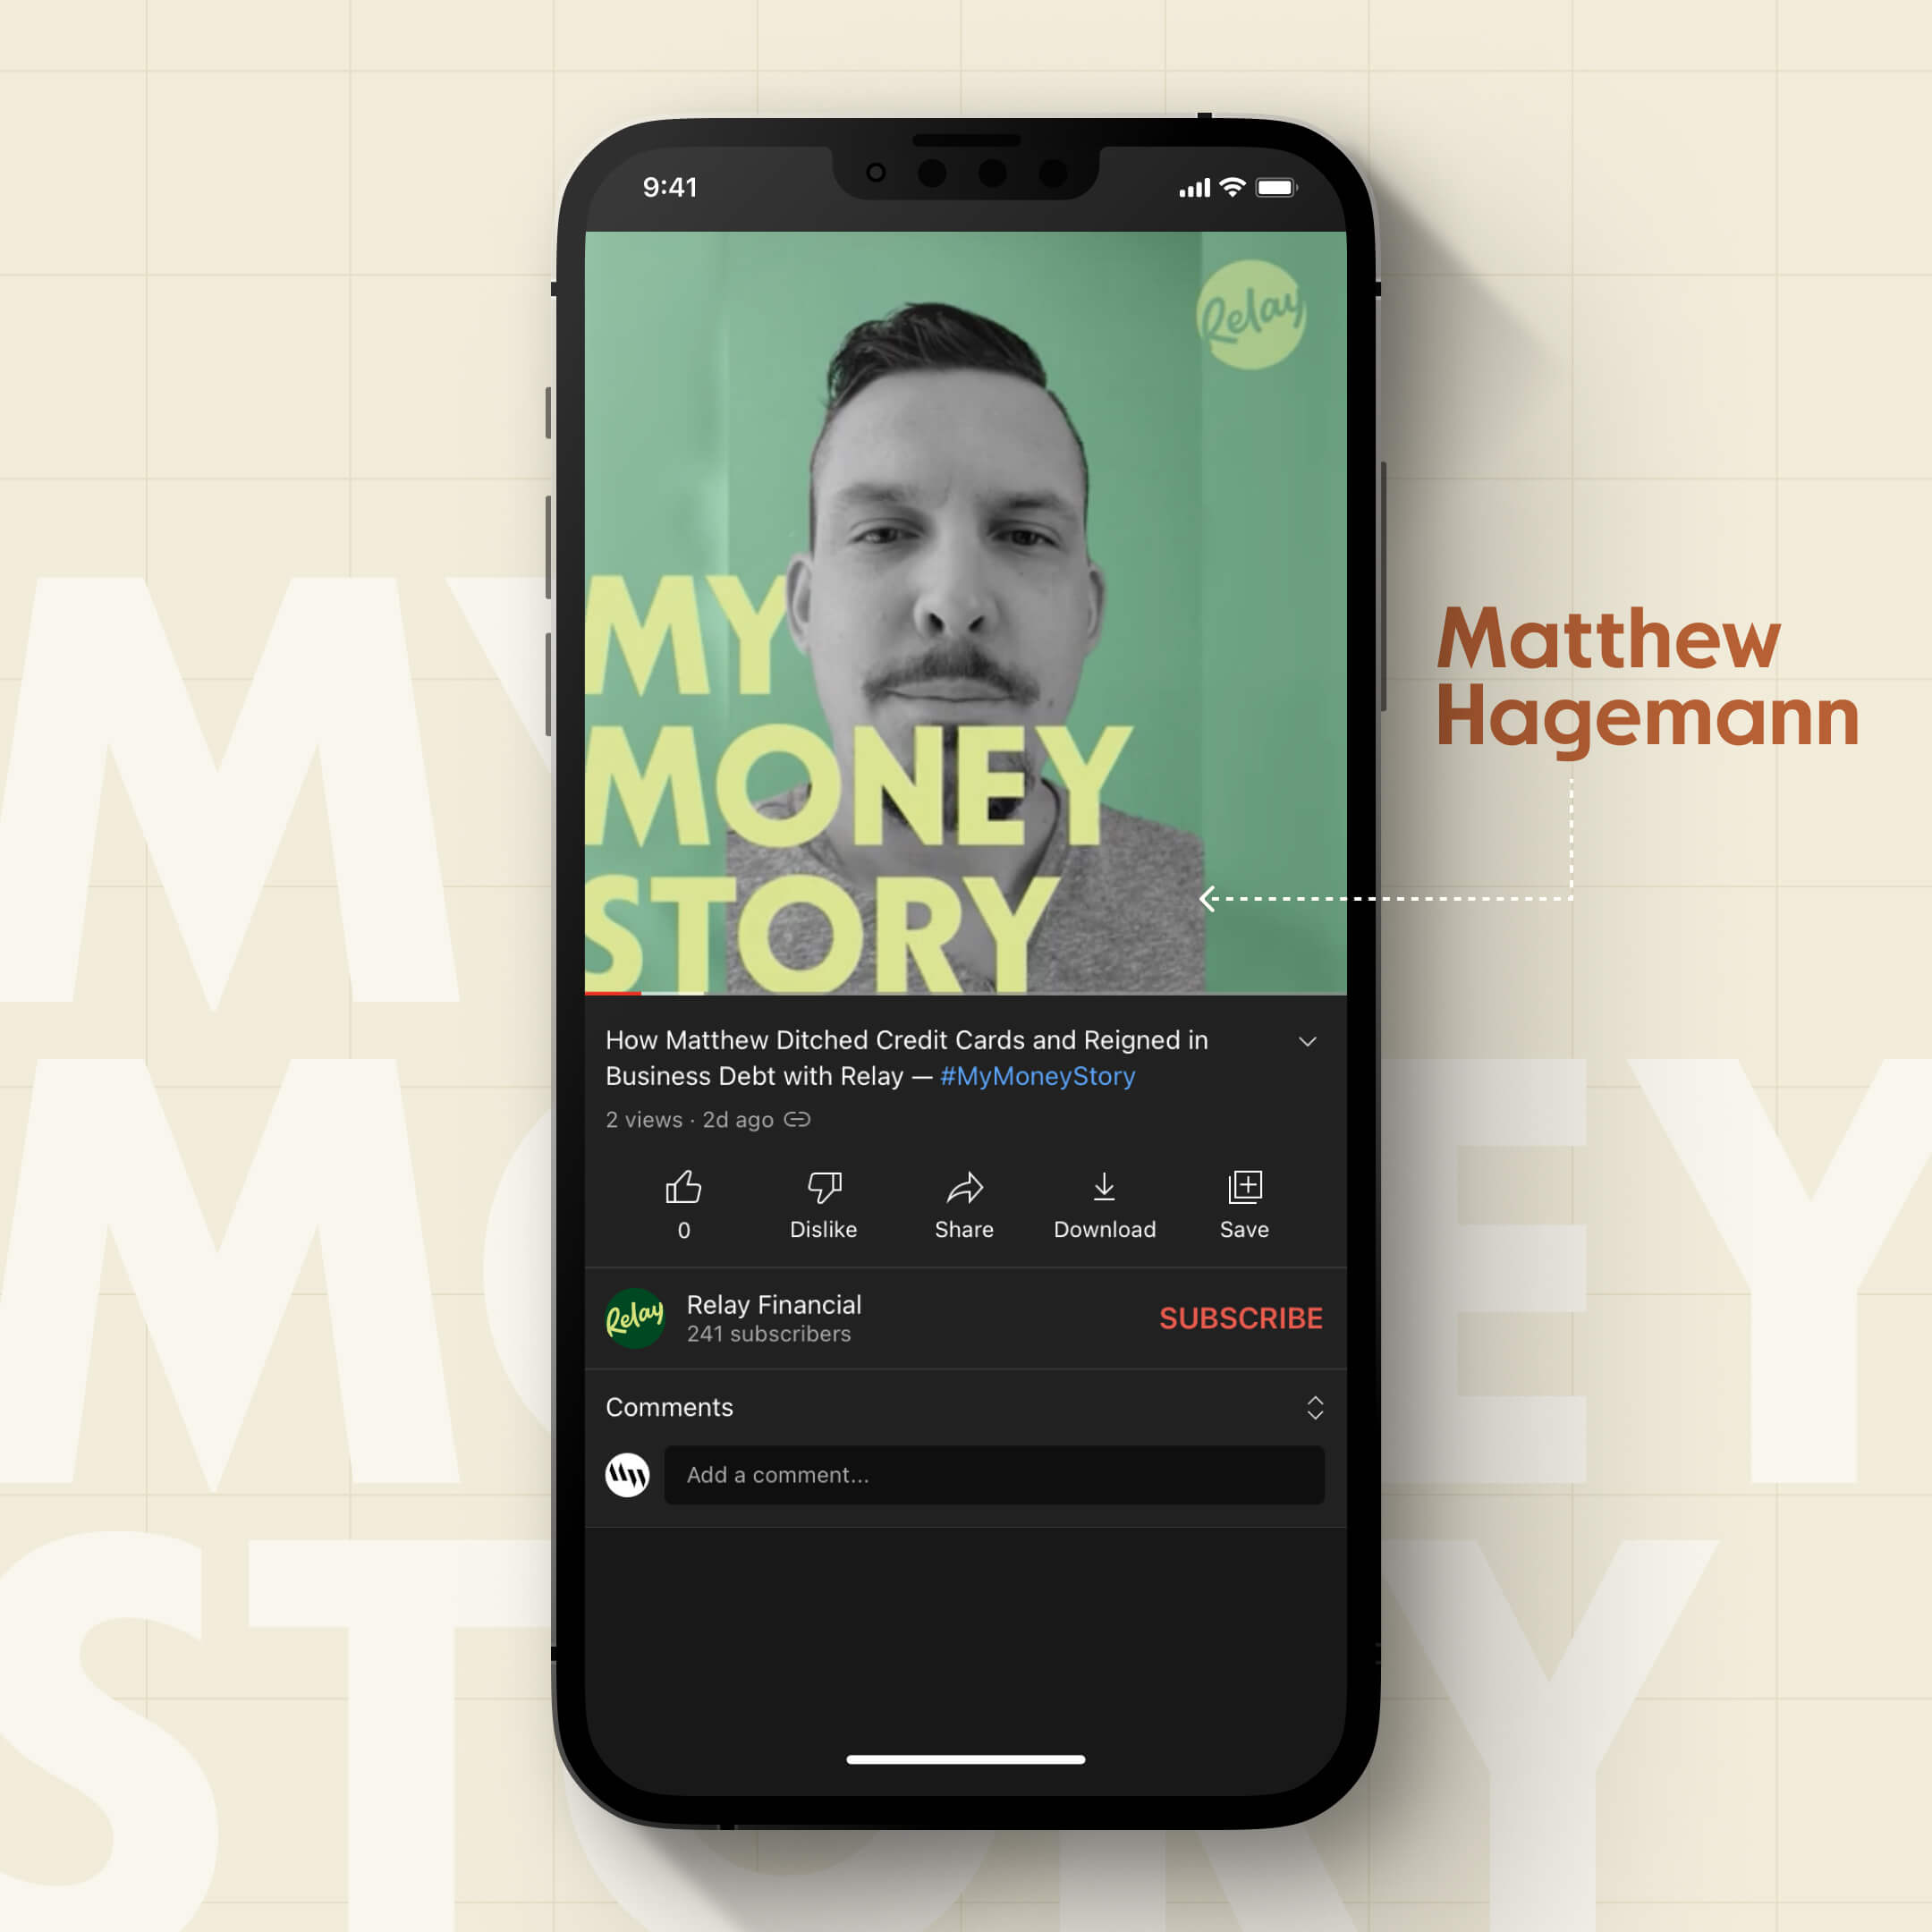 Matthew Hagemann's My Money Story video